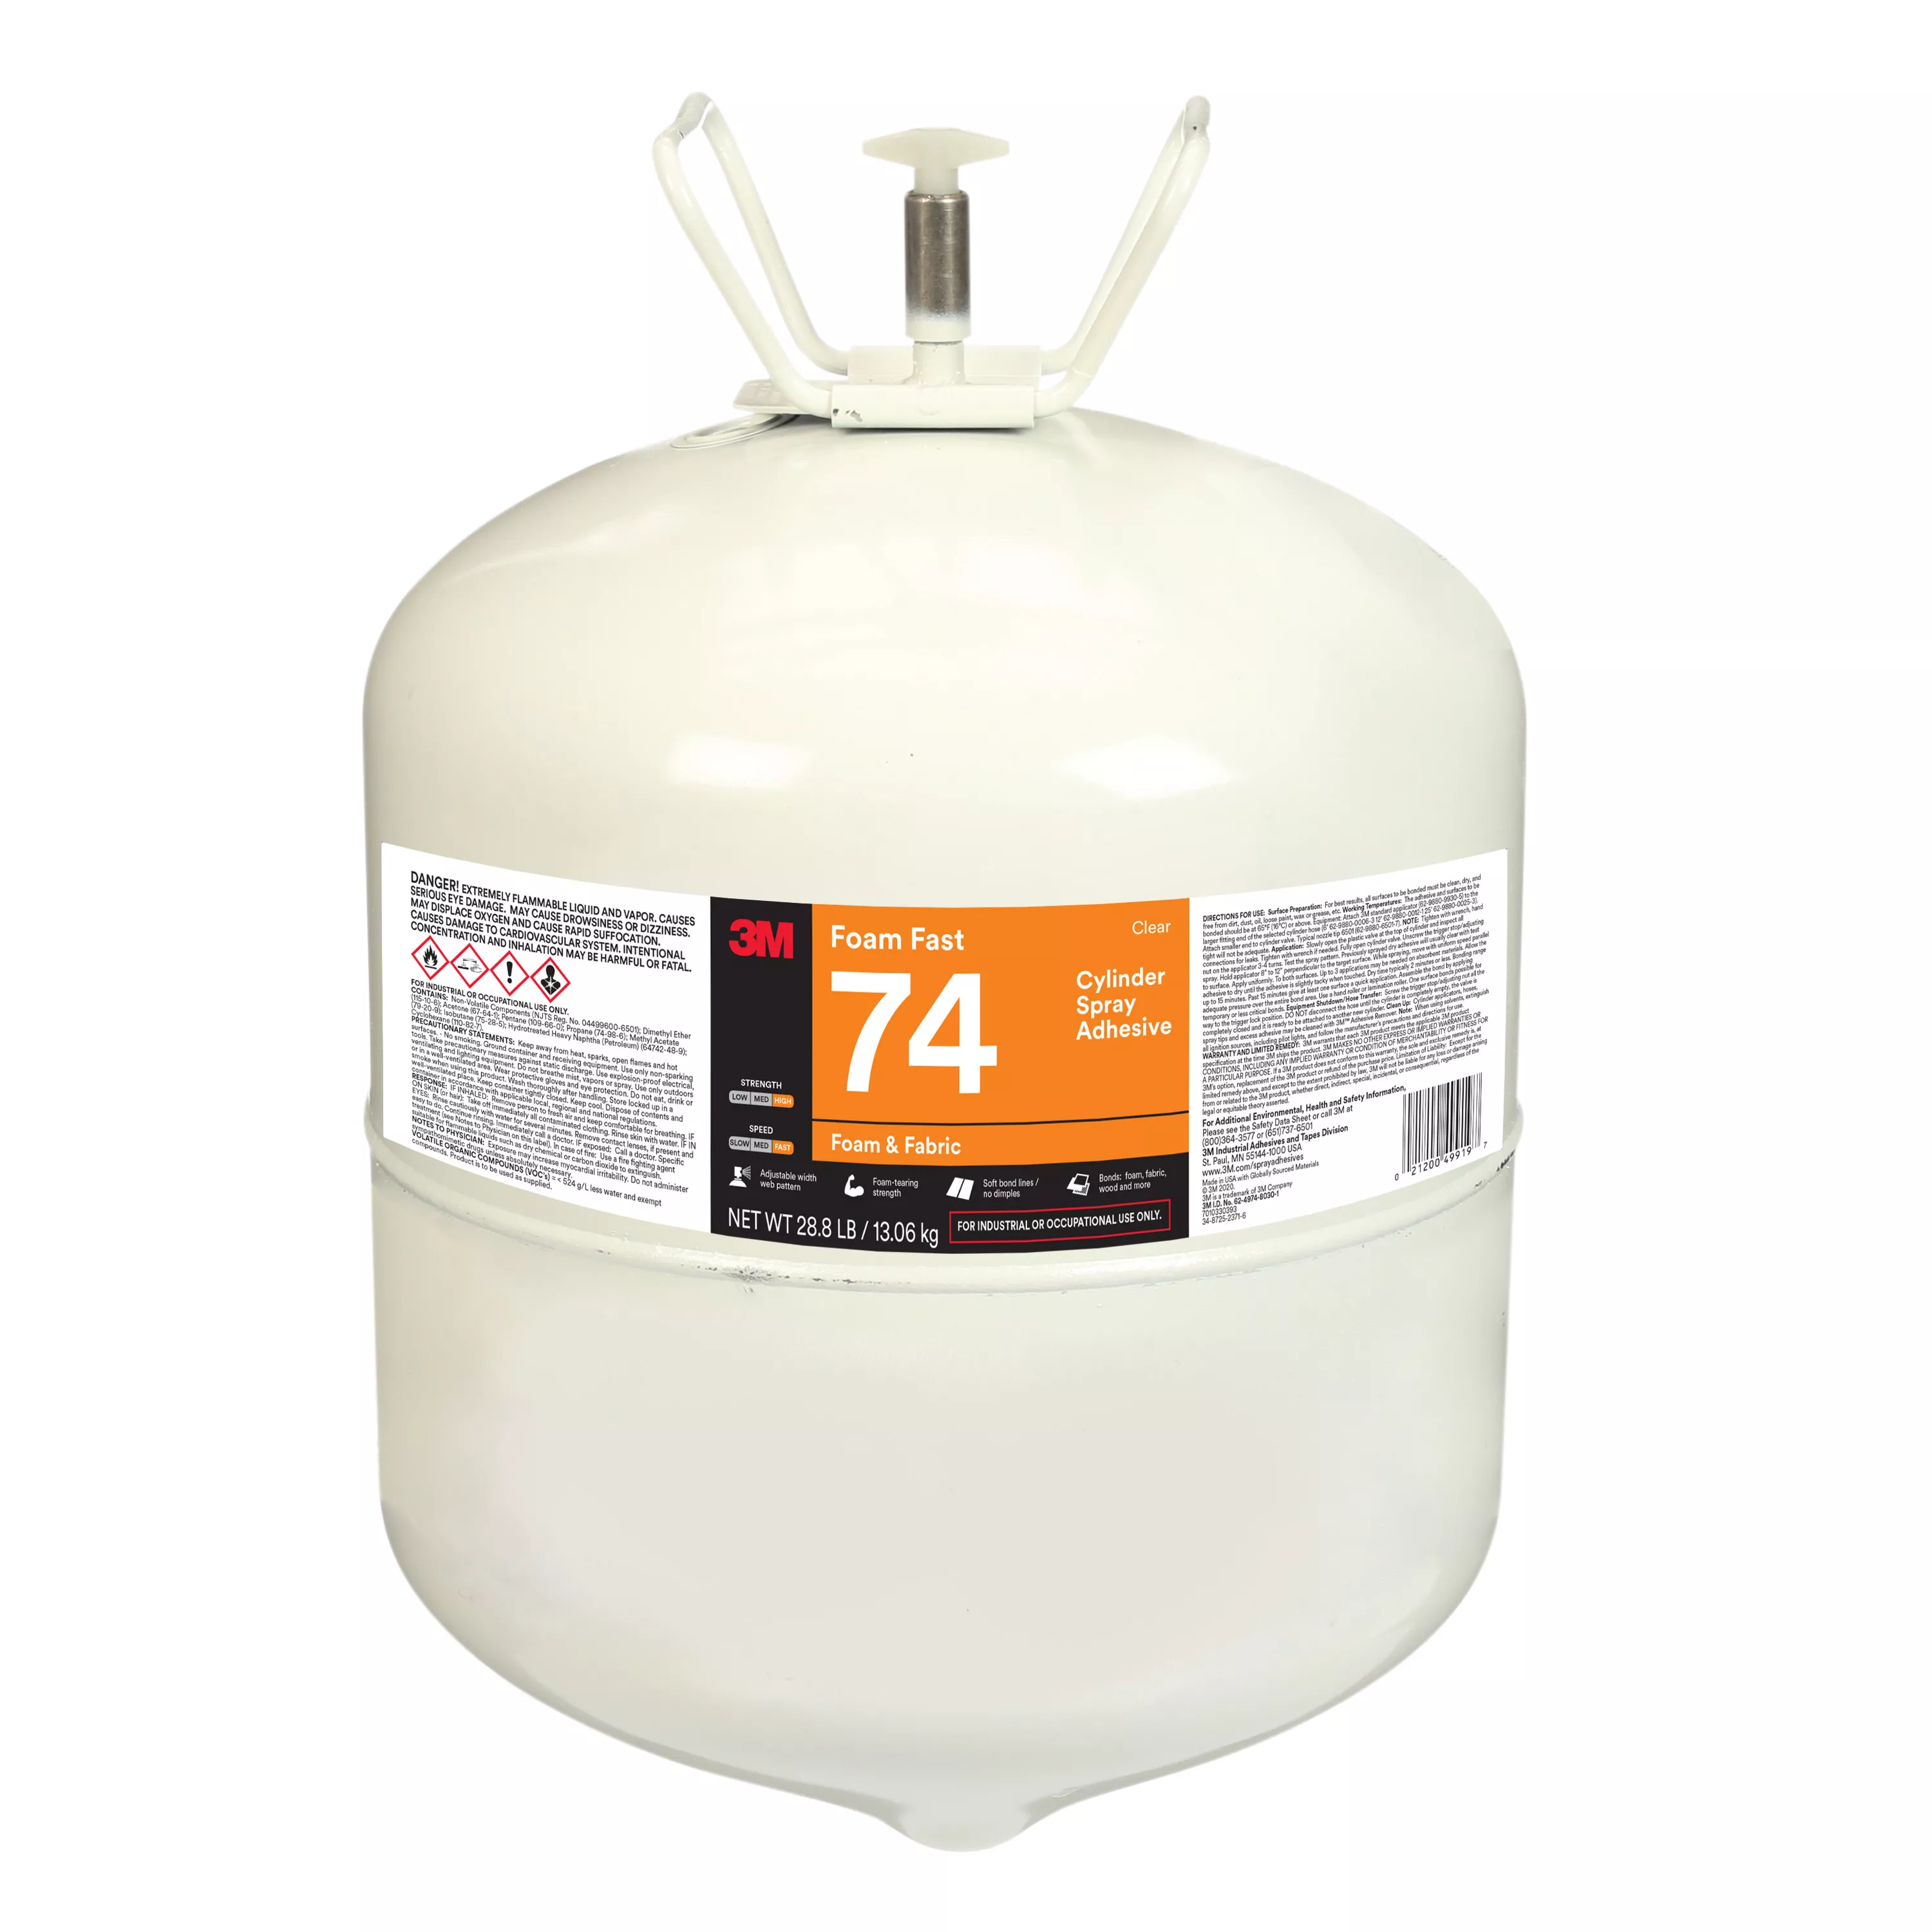 3M™ Foam Fast 74, Cylinder Spray Adhesive, Clear, Large Cylinder (Net Wt
28.8 lb), 1 Cylinder/Case